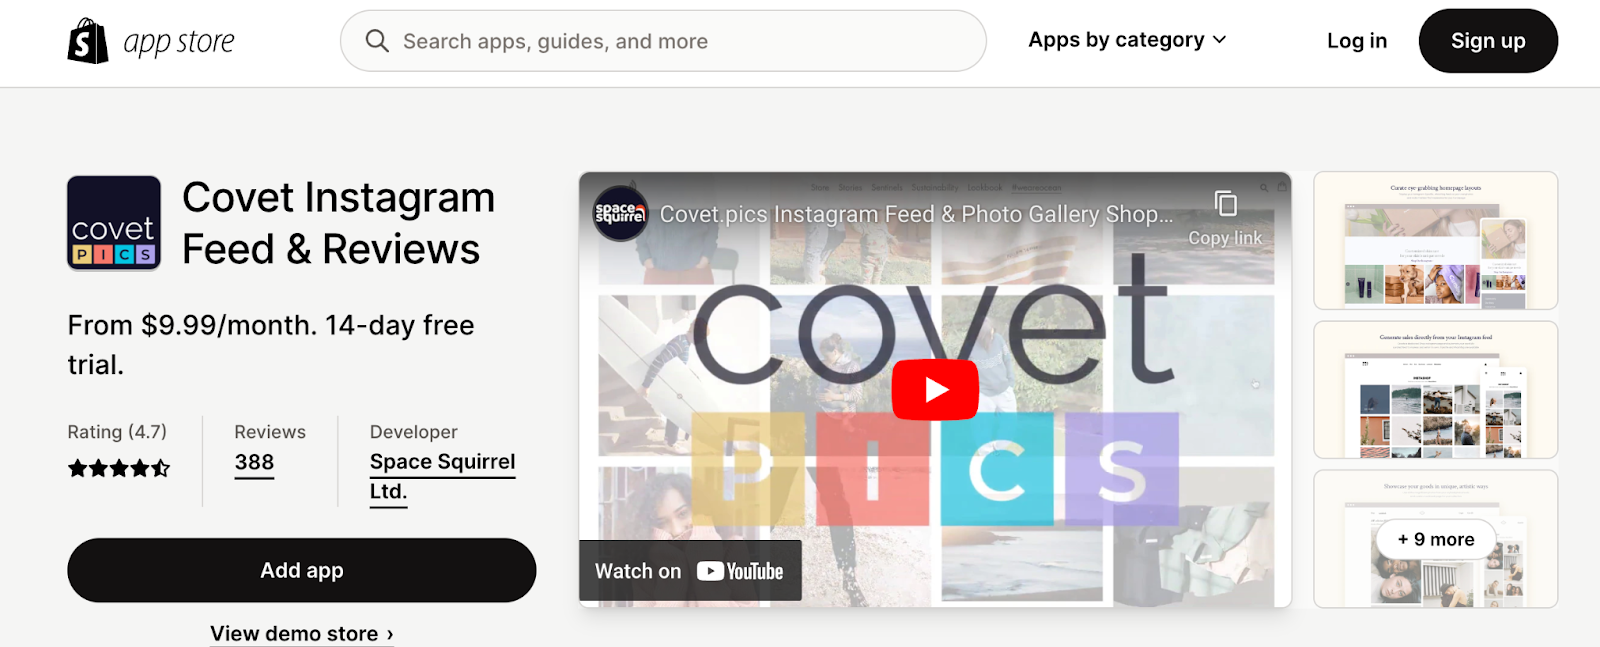 best shopify apps for instagram - Covet.pics